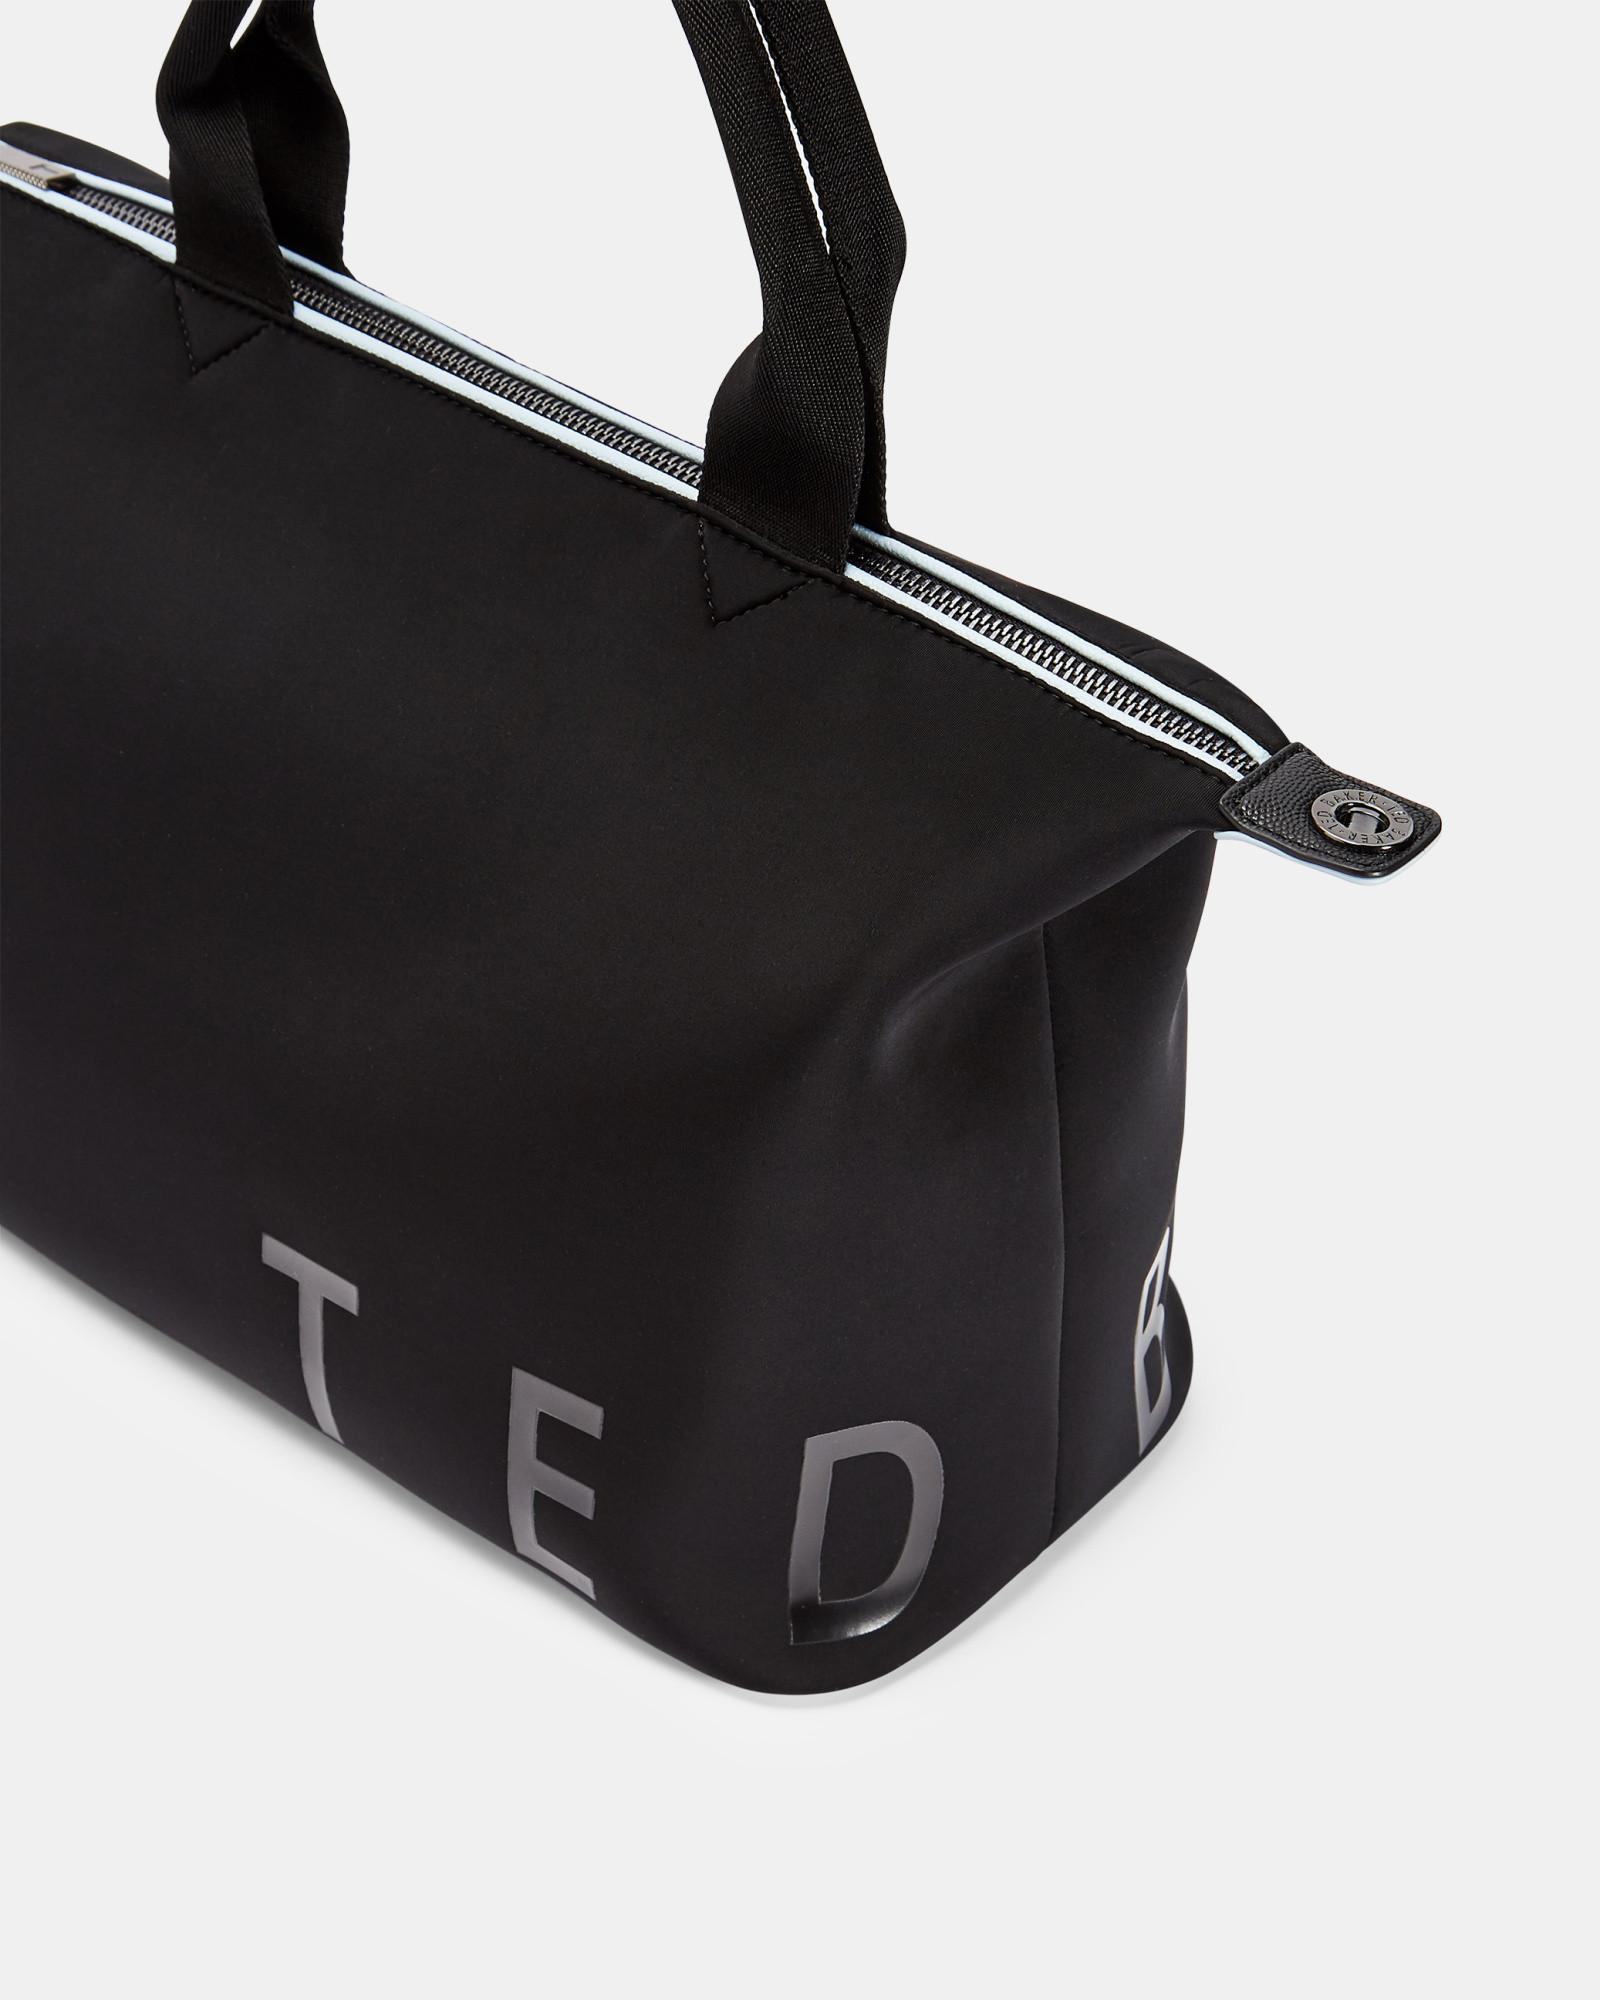 Ted Baker Branded Neoprene Small Tote Bag in Black - Lyst